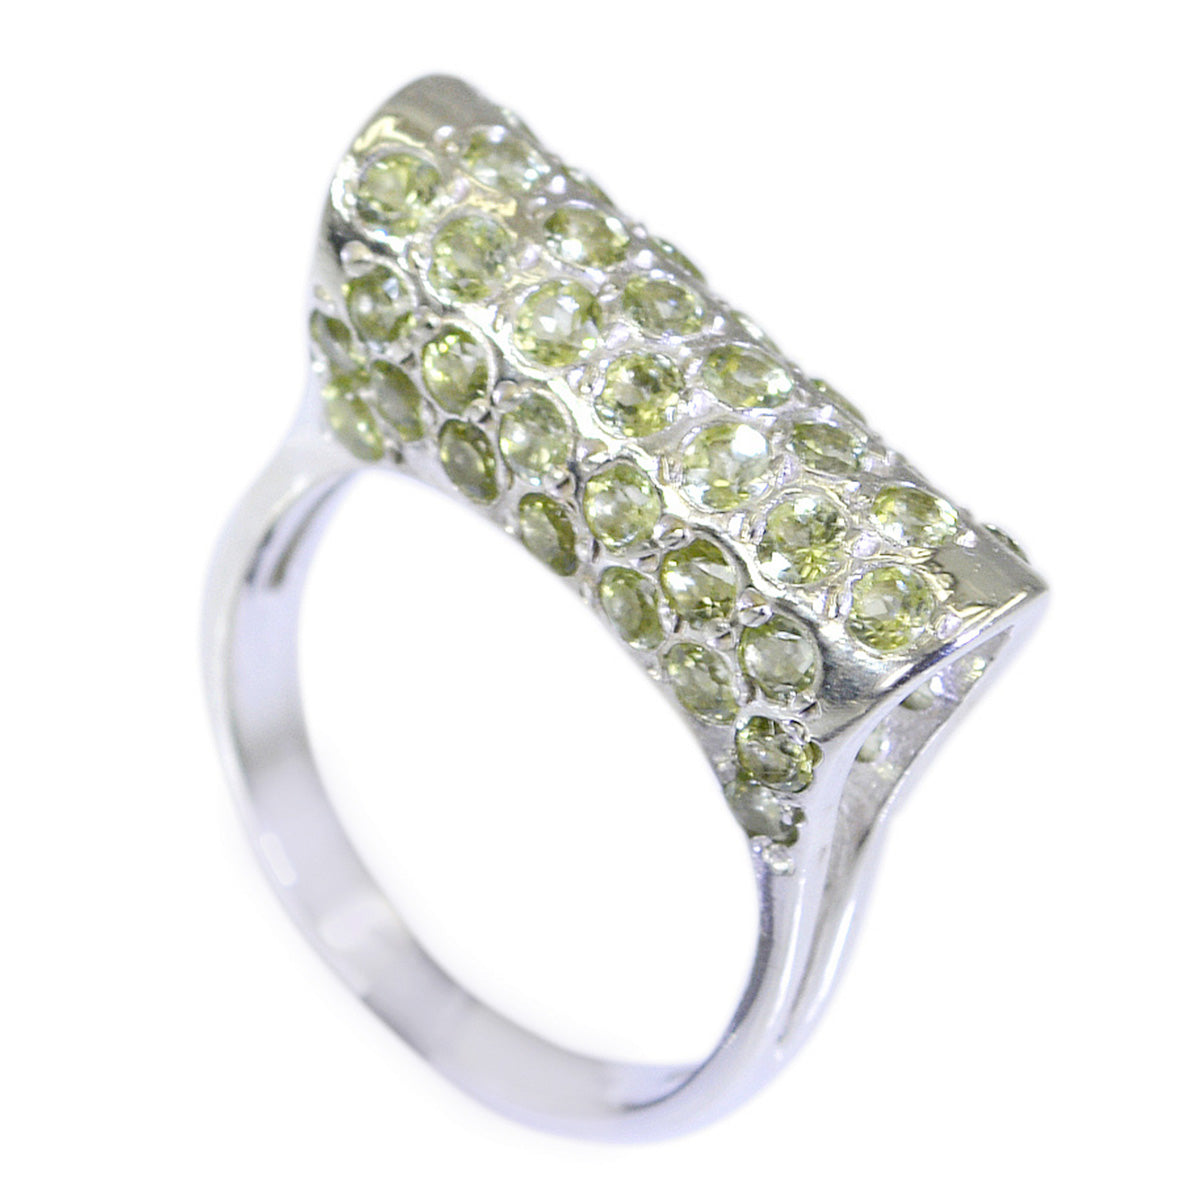 Handcrafted Gemstone Peridot Sterling Silver Ring Fine Diamond Jewelry